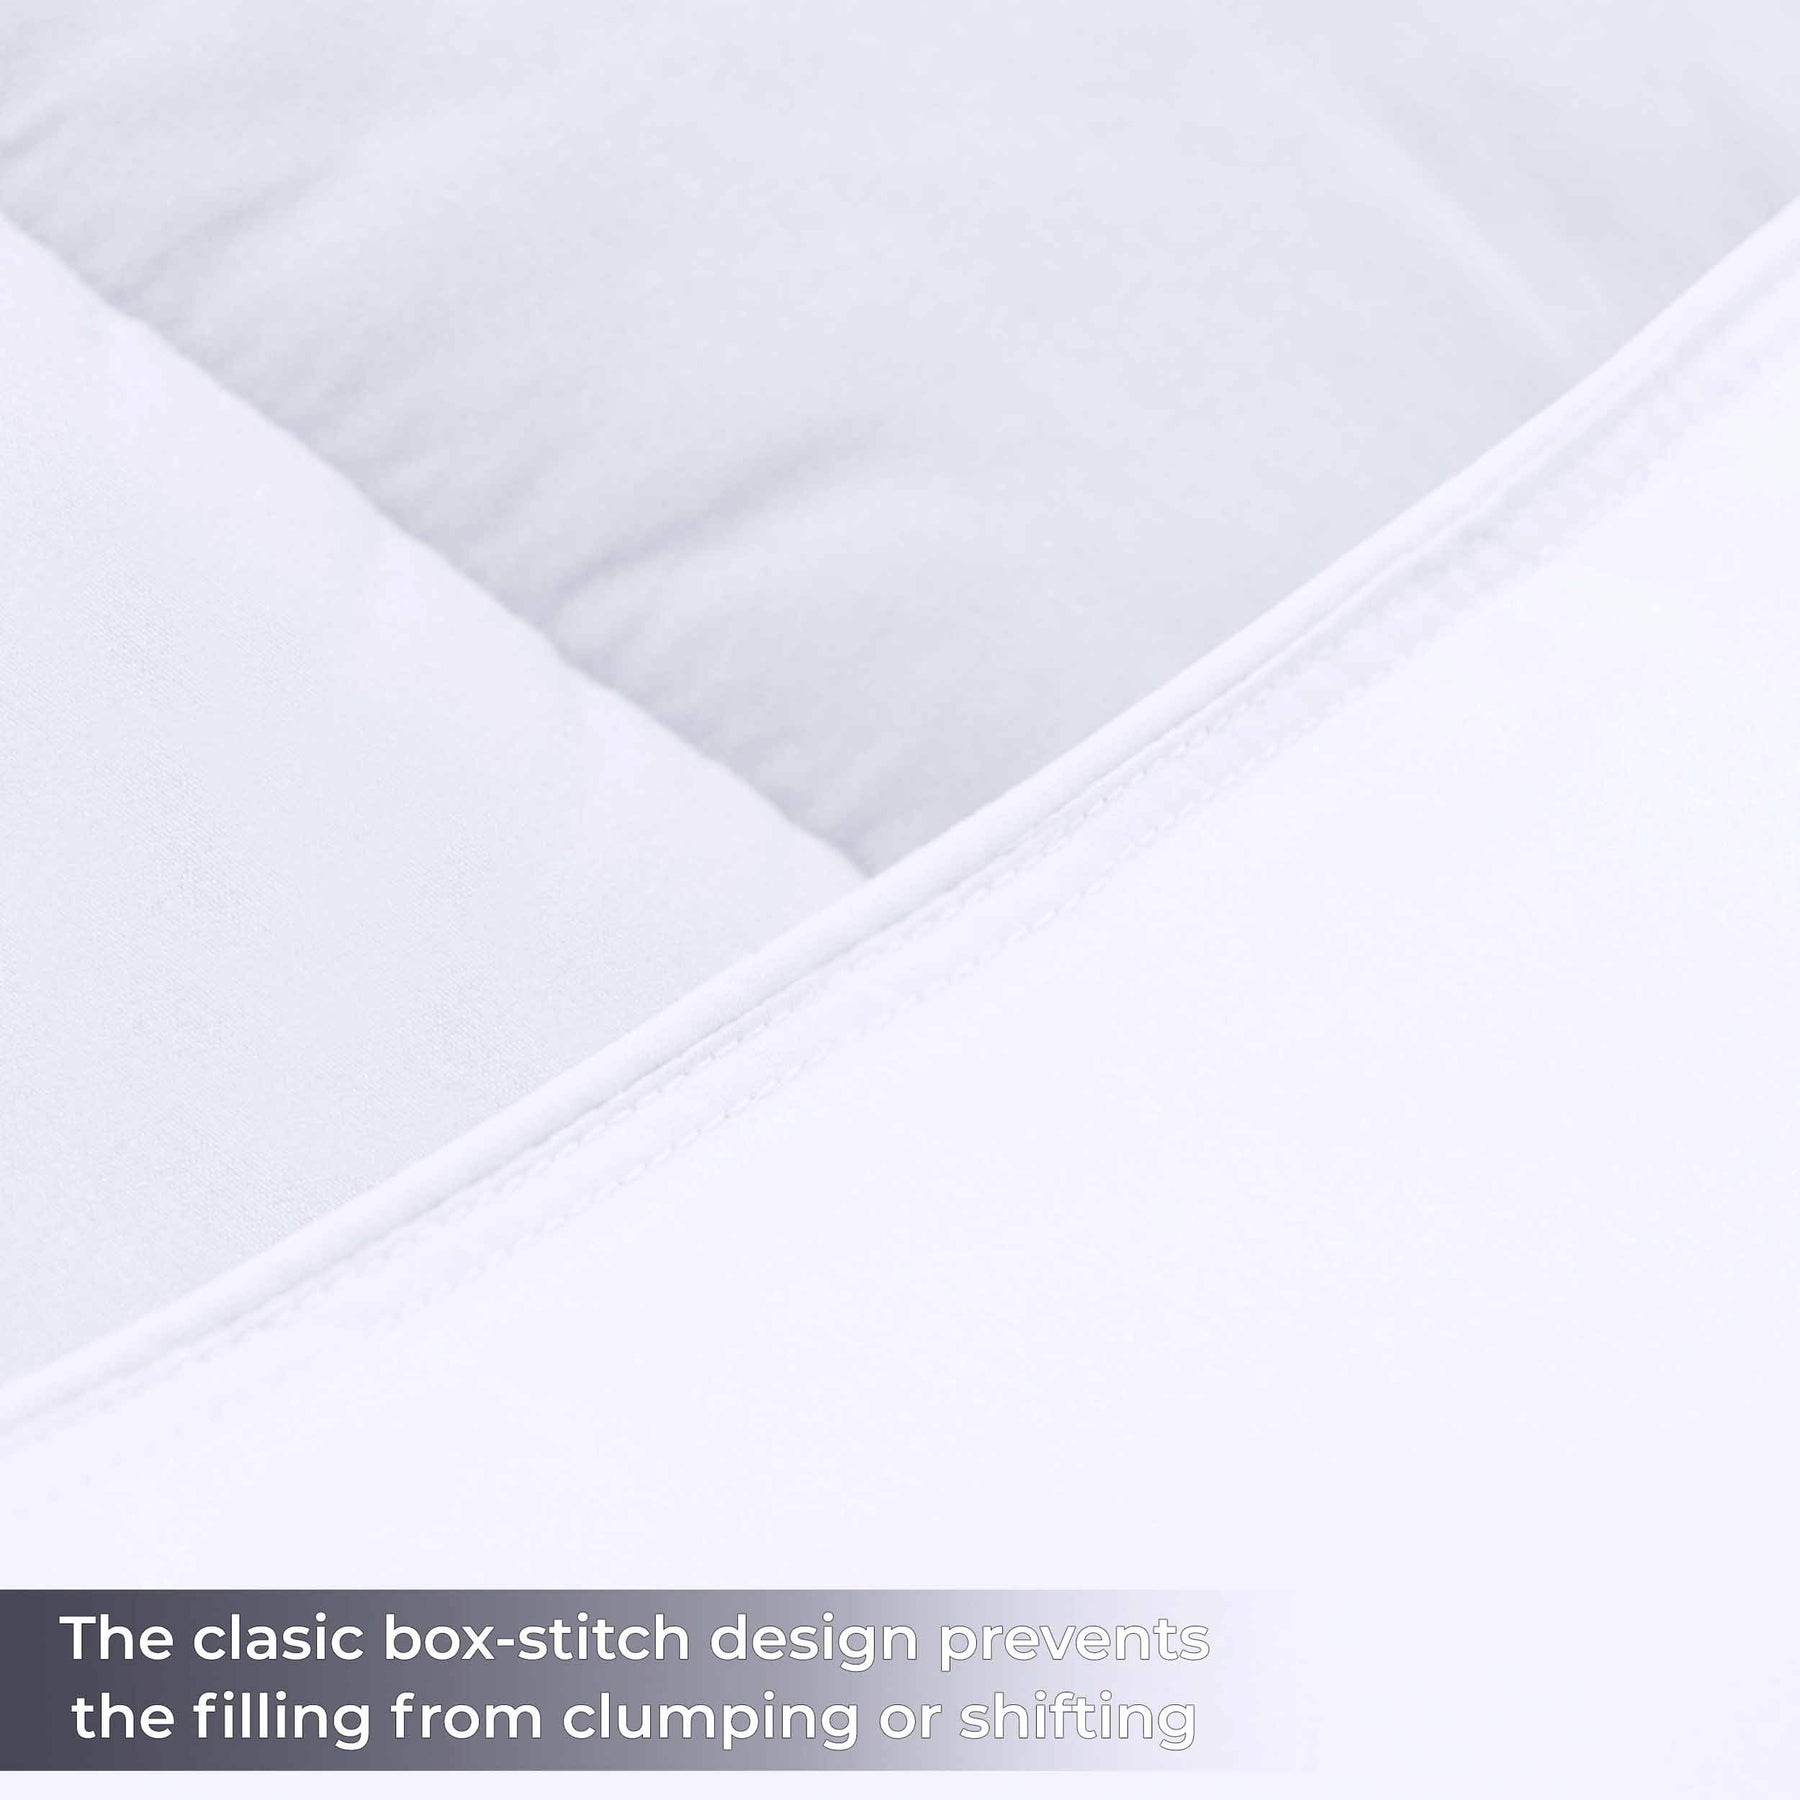 Brushed Microfiber Reversible Down Alternative Comforter - White